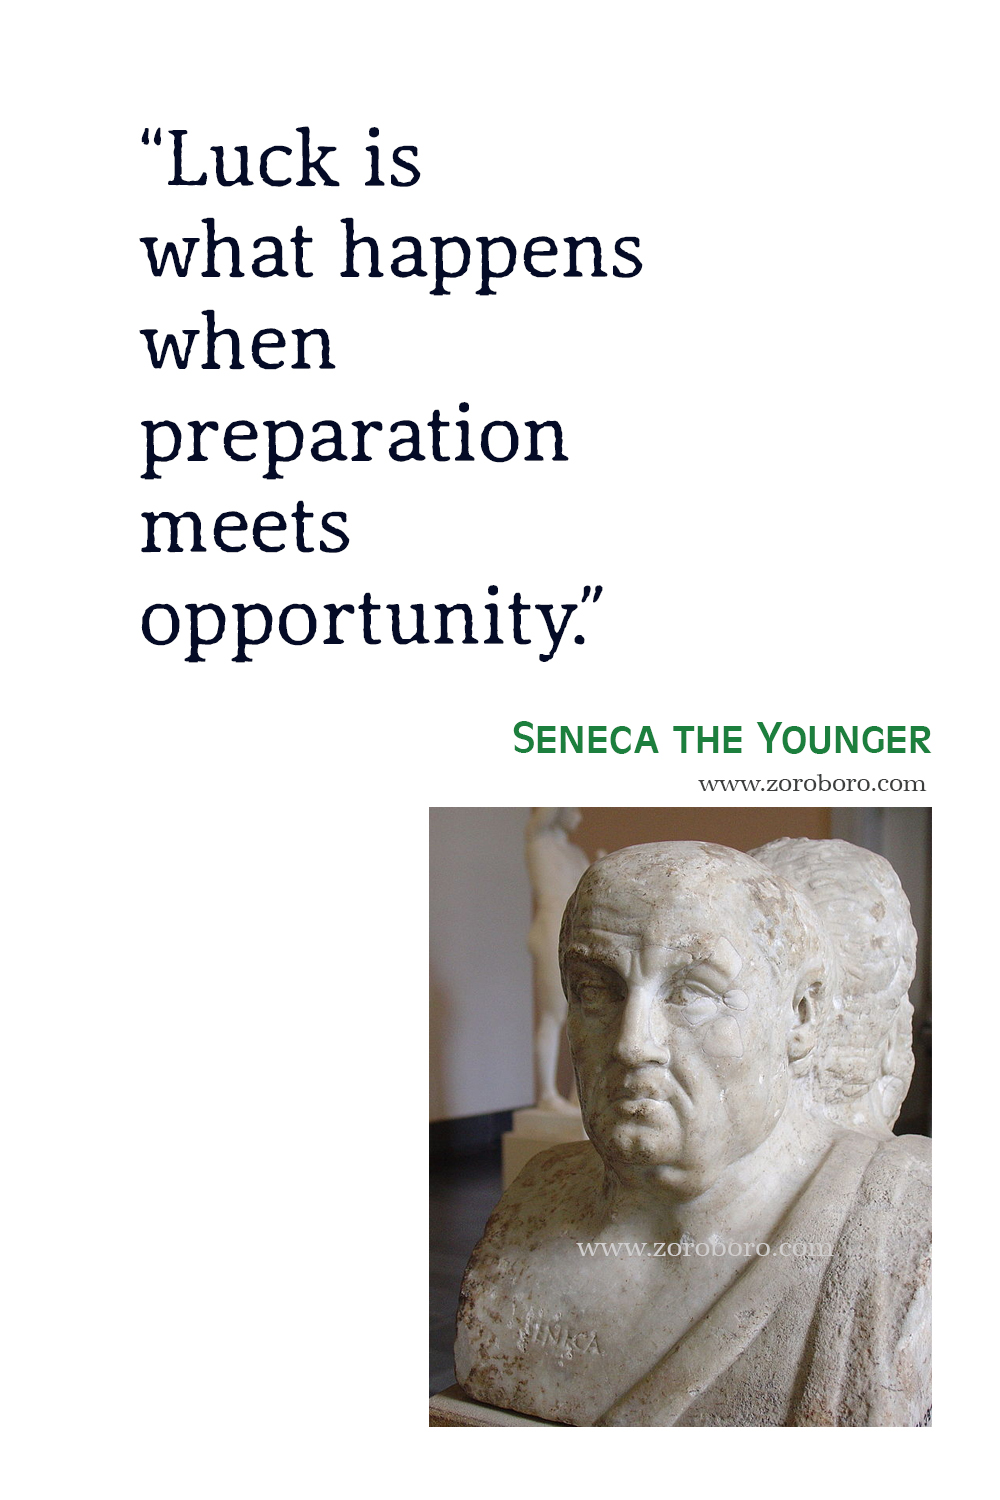 Seneca Quotes, Seneca Stoic Philosophy, Seneca Photo, Seneca Images, Seneca the Younger Books Quotes, Seneca Stoic.